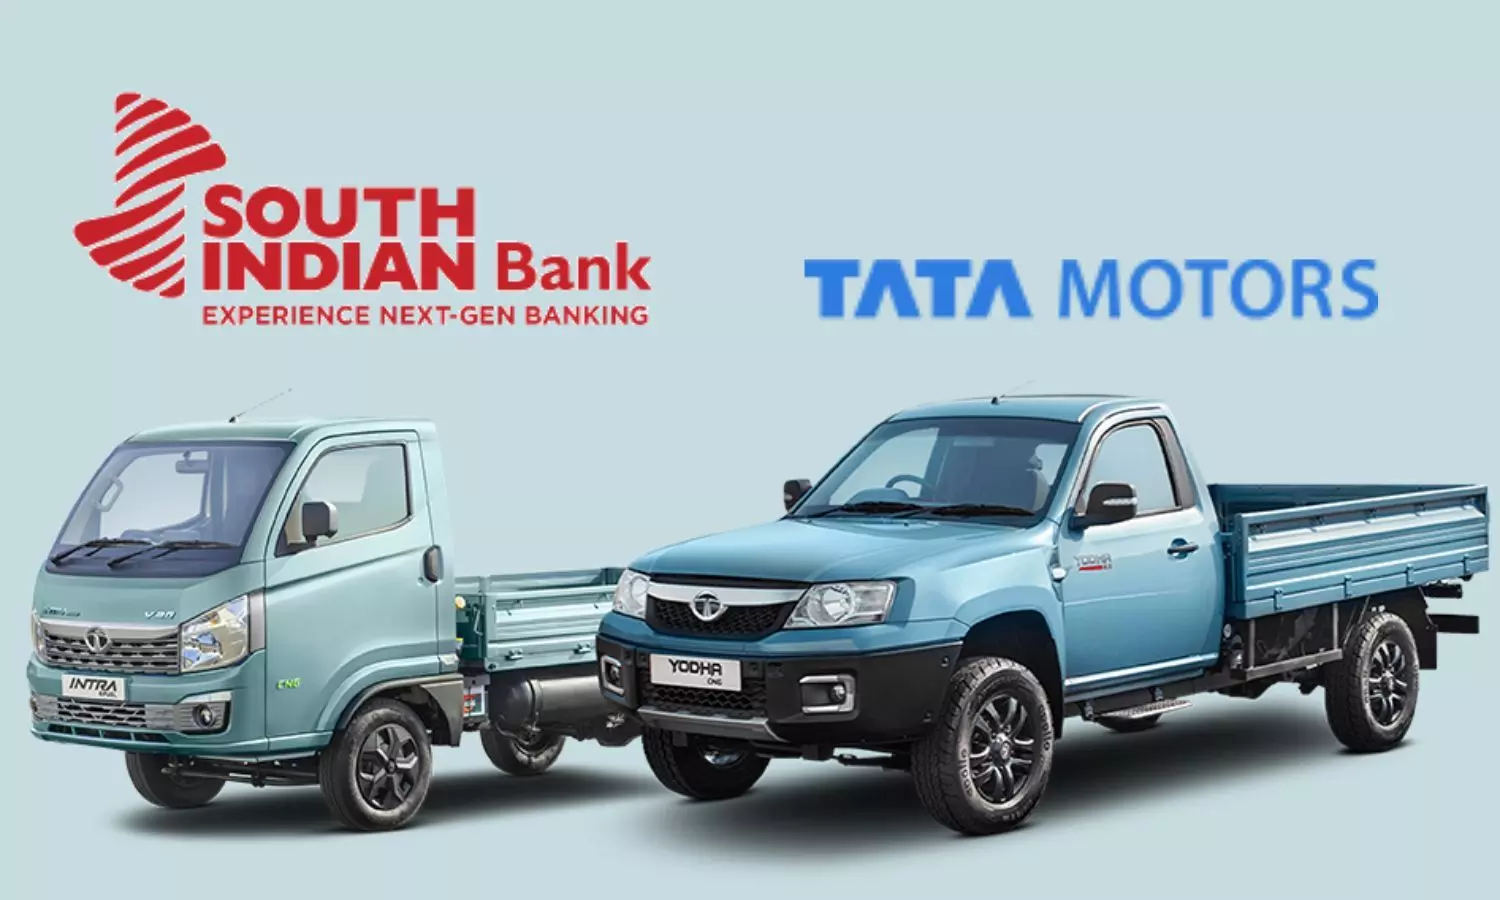 Tata Motors models, SIB logo